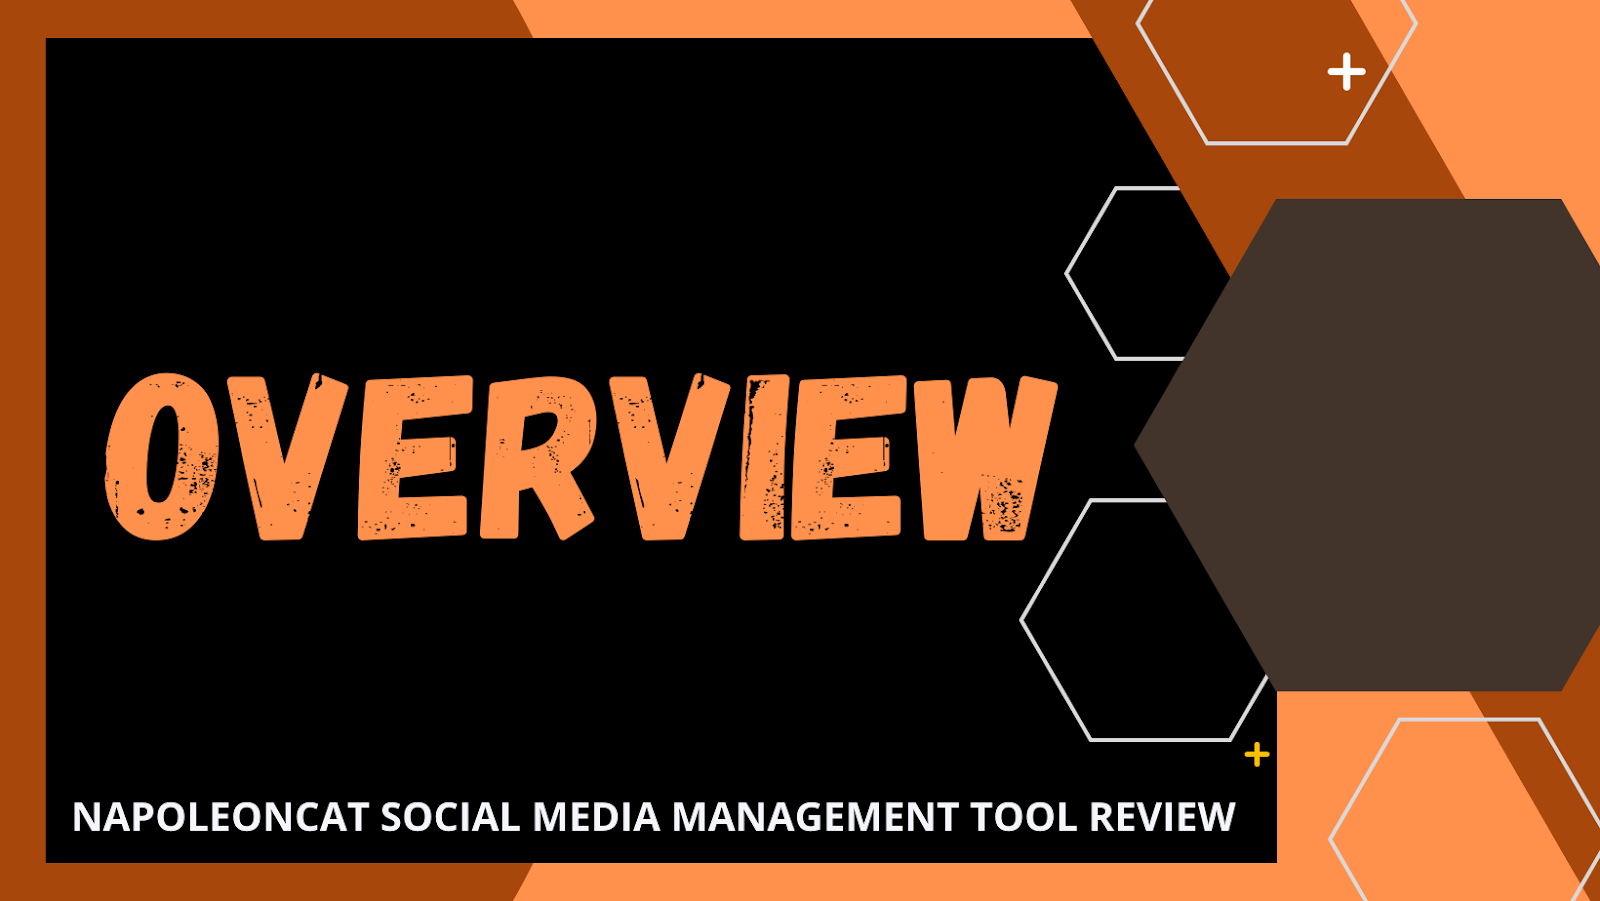 NapoleonCat Social Media Management Tool: Overview